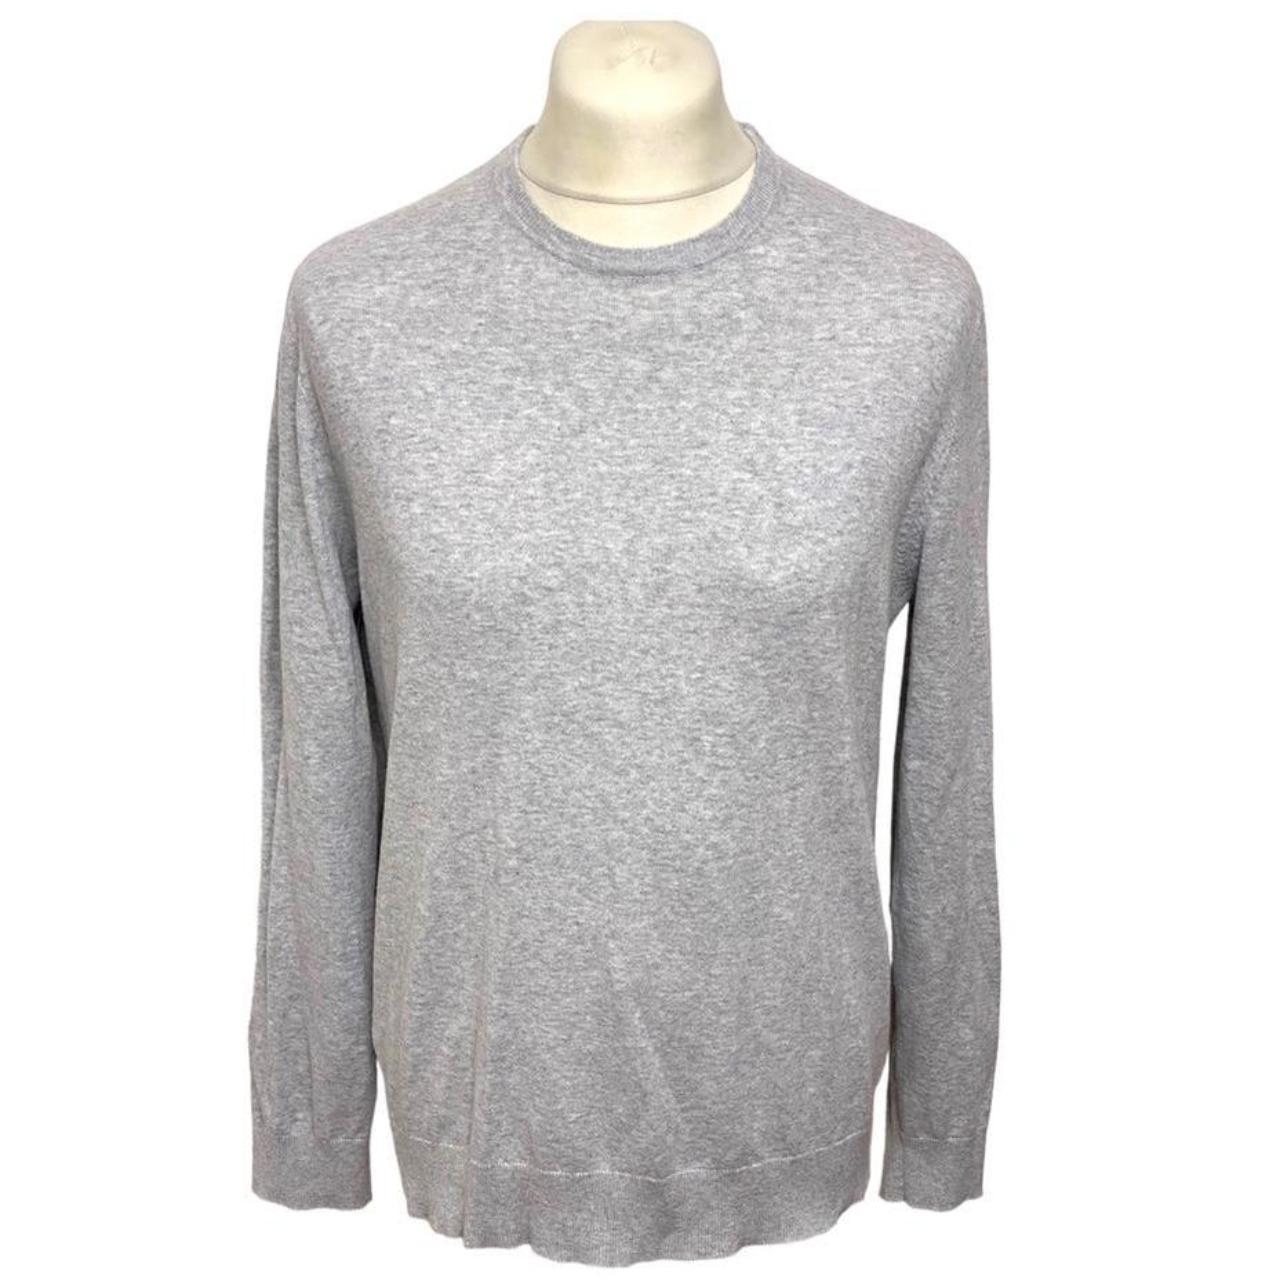 BURTON MENSWEAR London Large Grey Sweatshirt 100%... - Depop